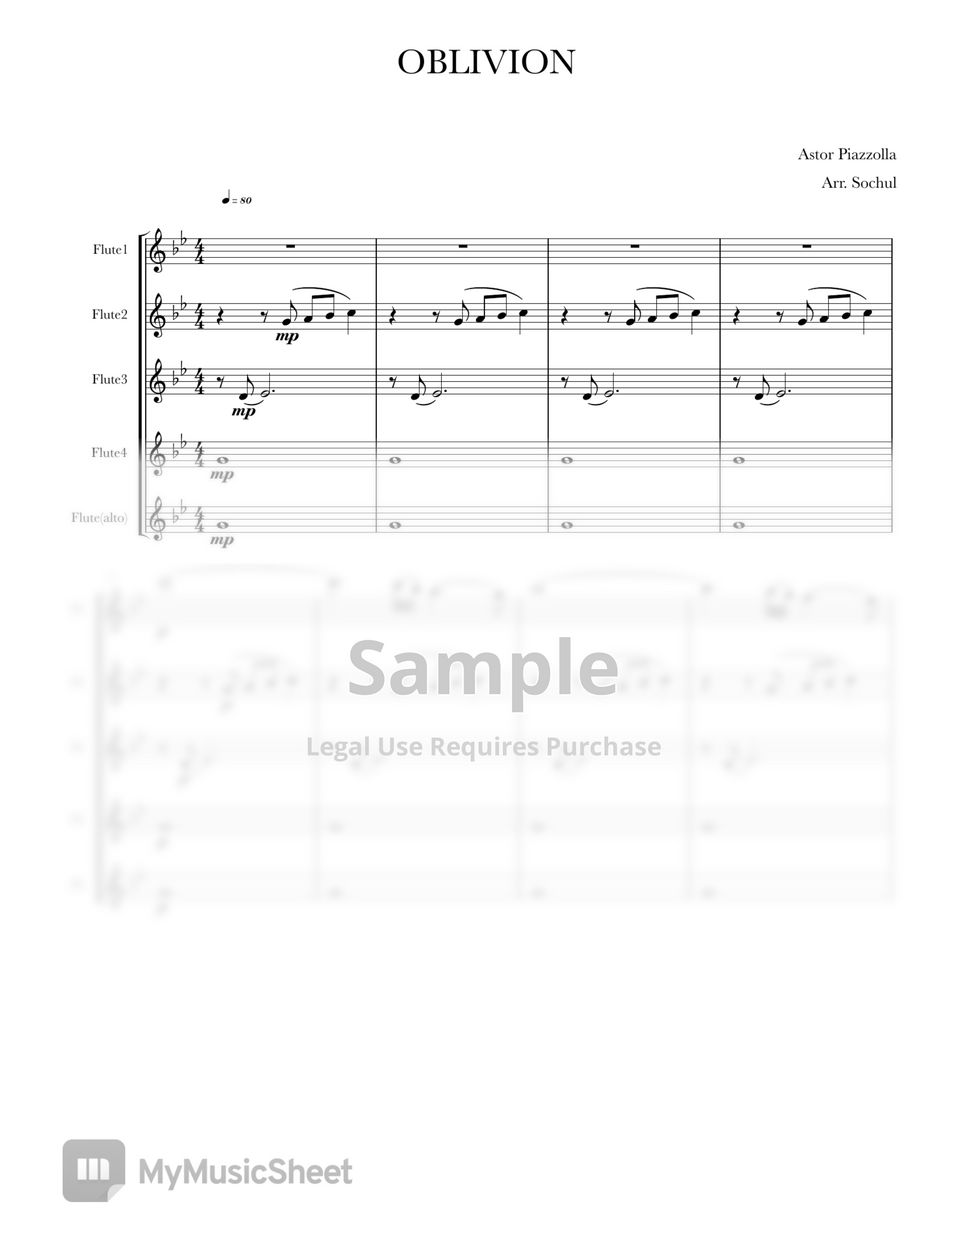 Astor Piazzolla - Oblivion (Flute ensemble) by Sochul